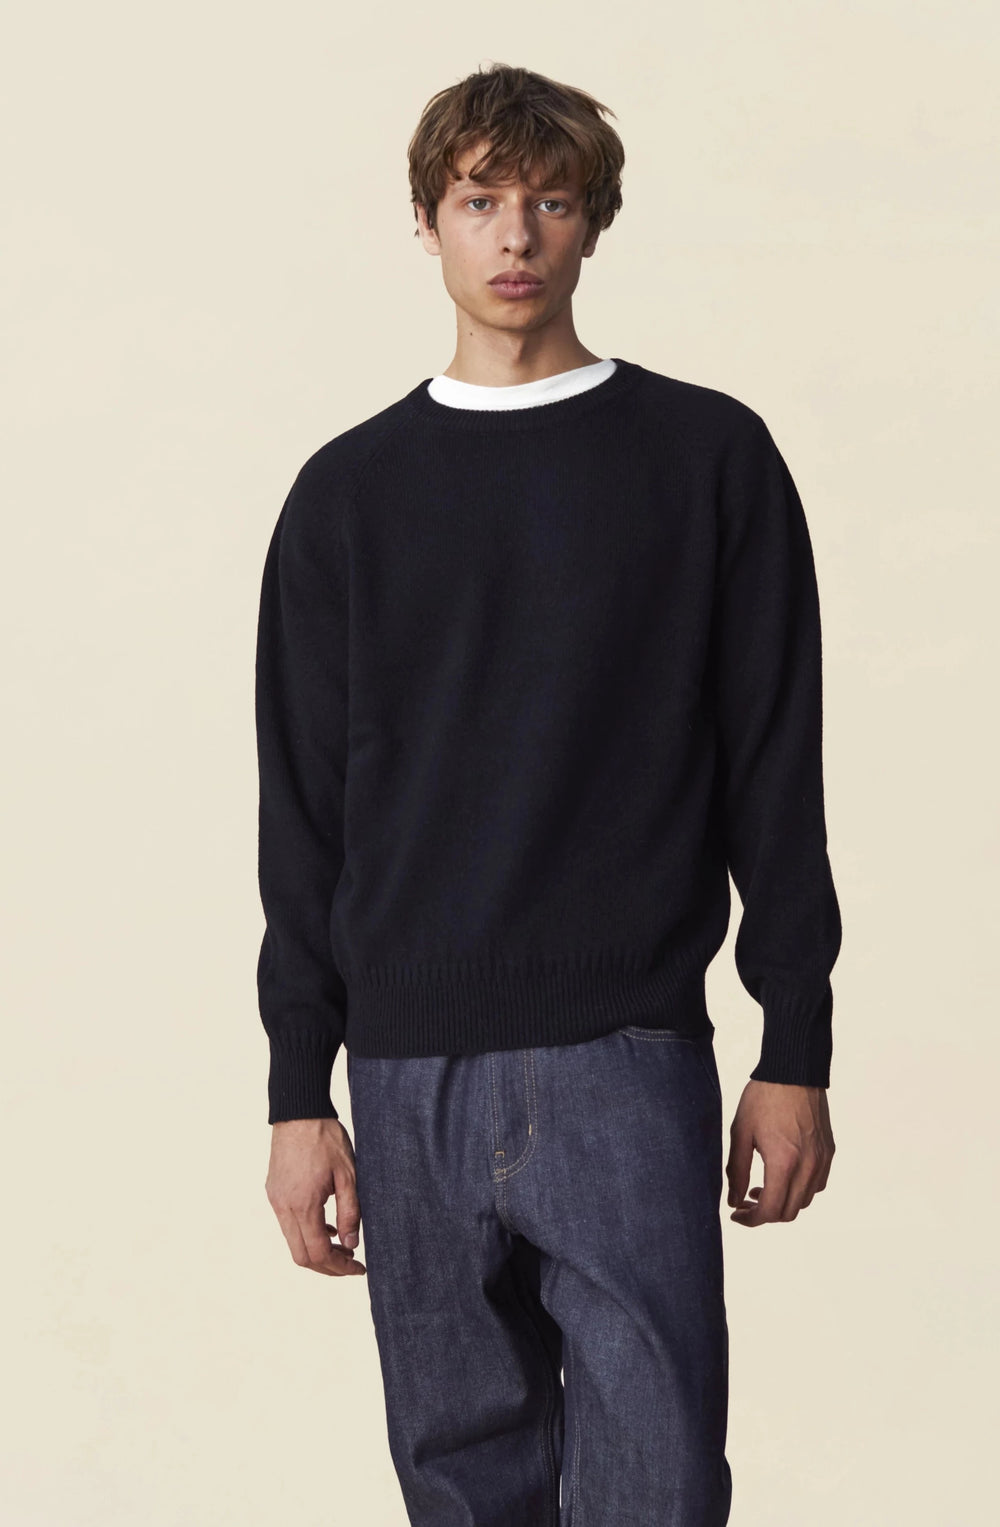 Men's cashmere crewneck sweater in Black